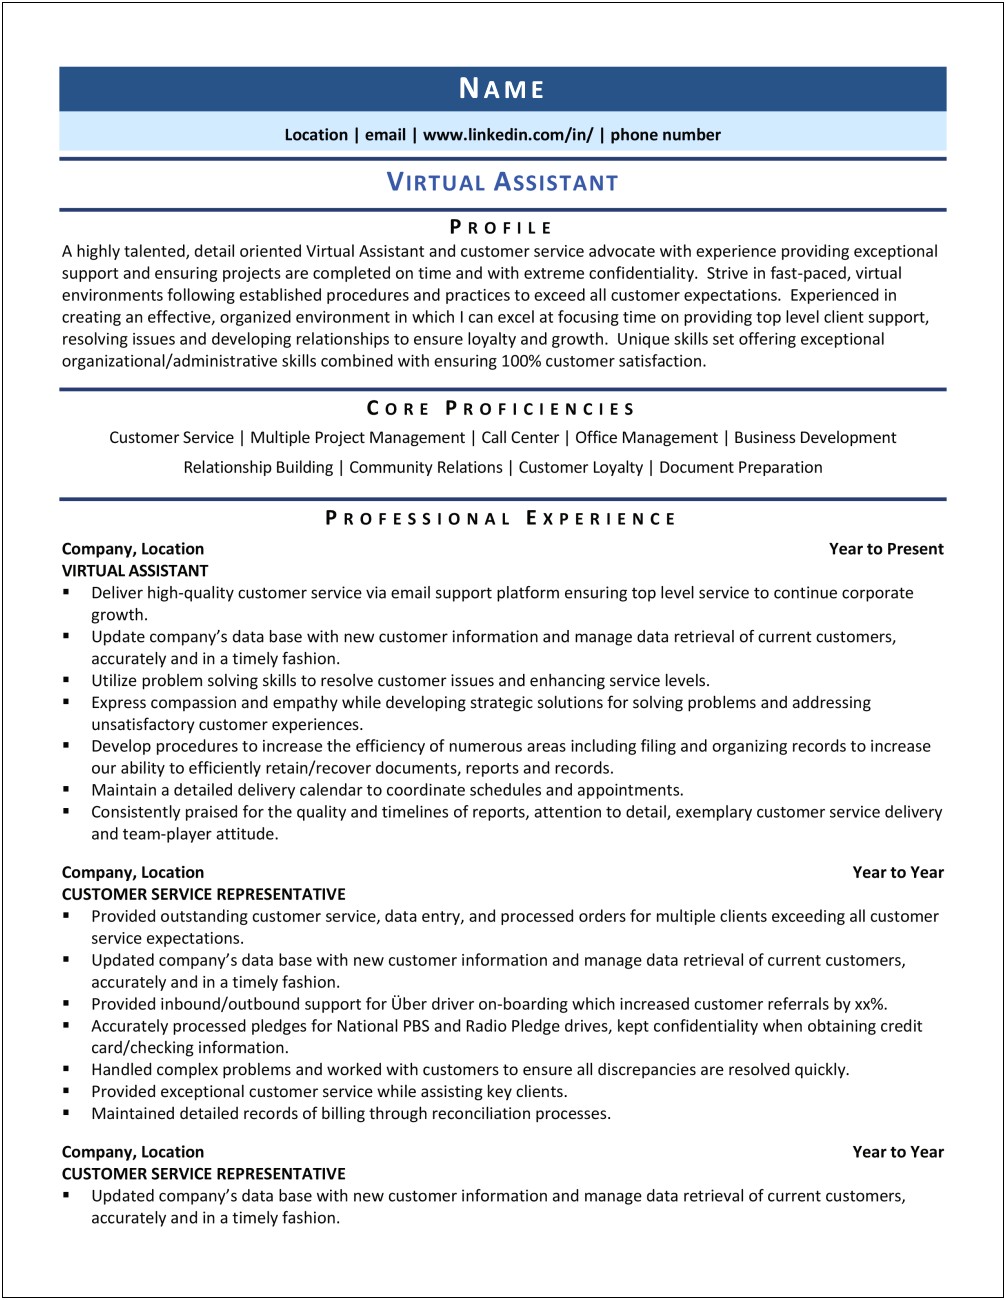 Virtual Assistant Job Description Resume